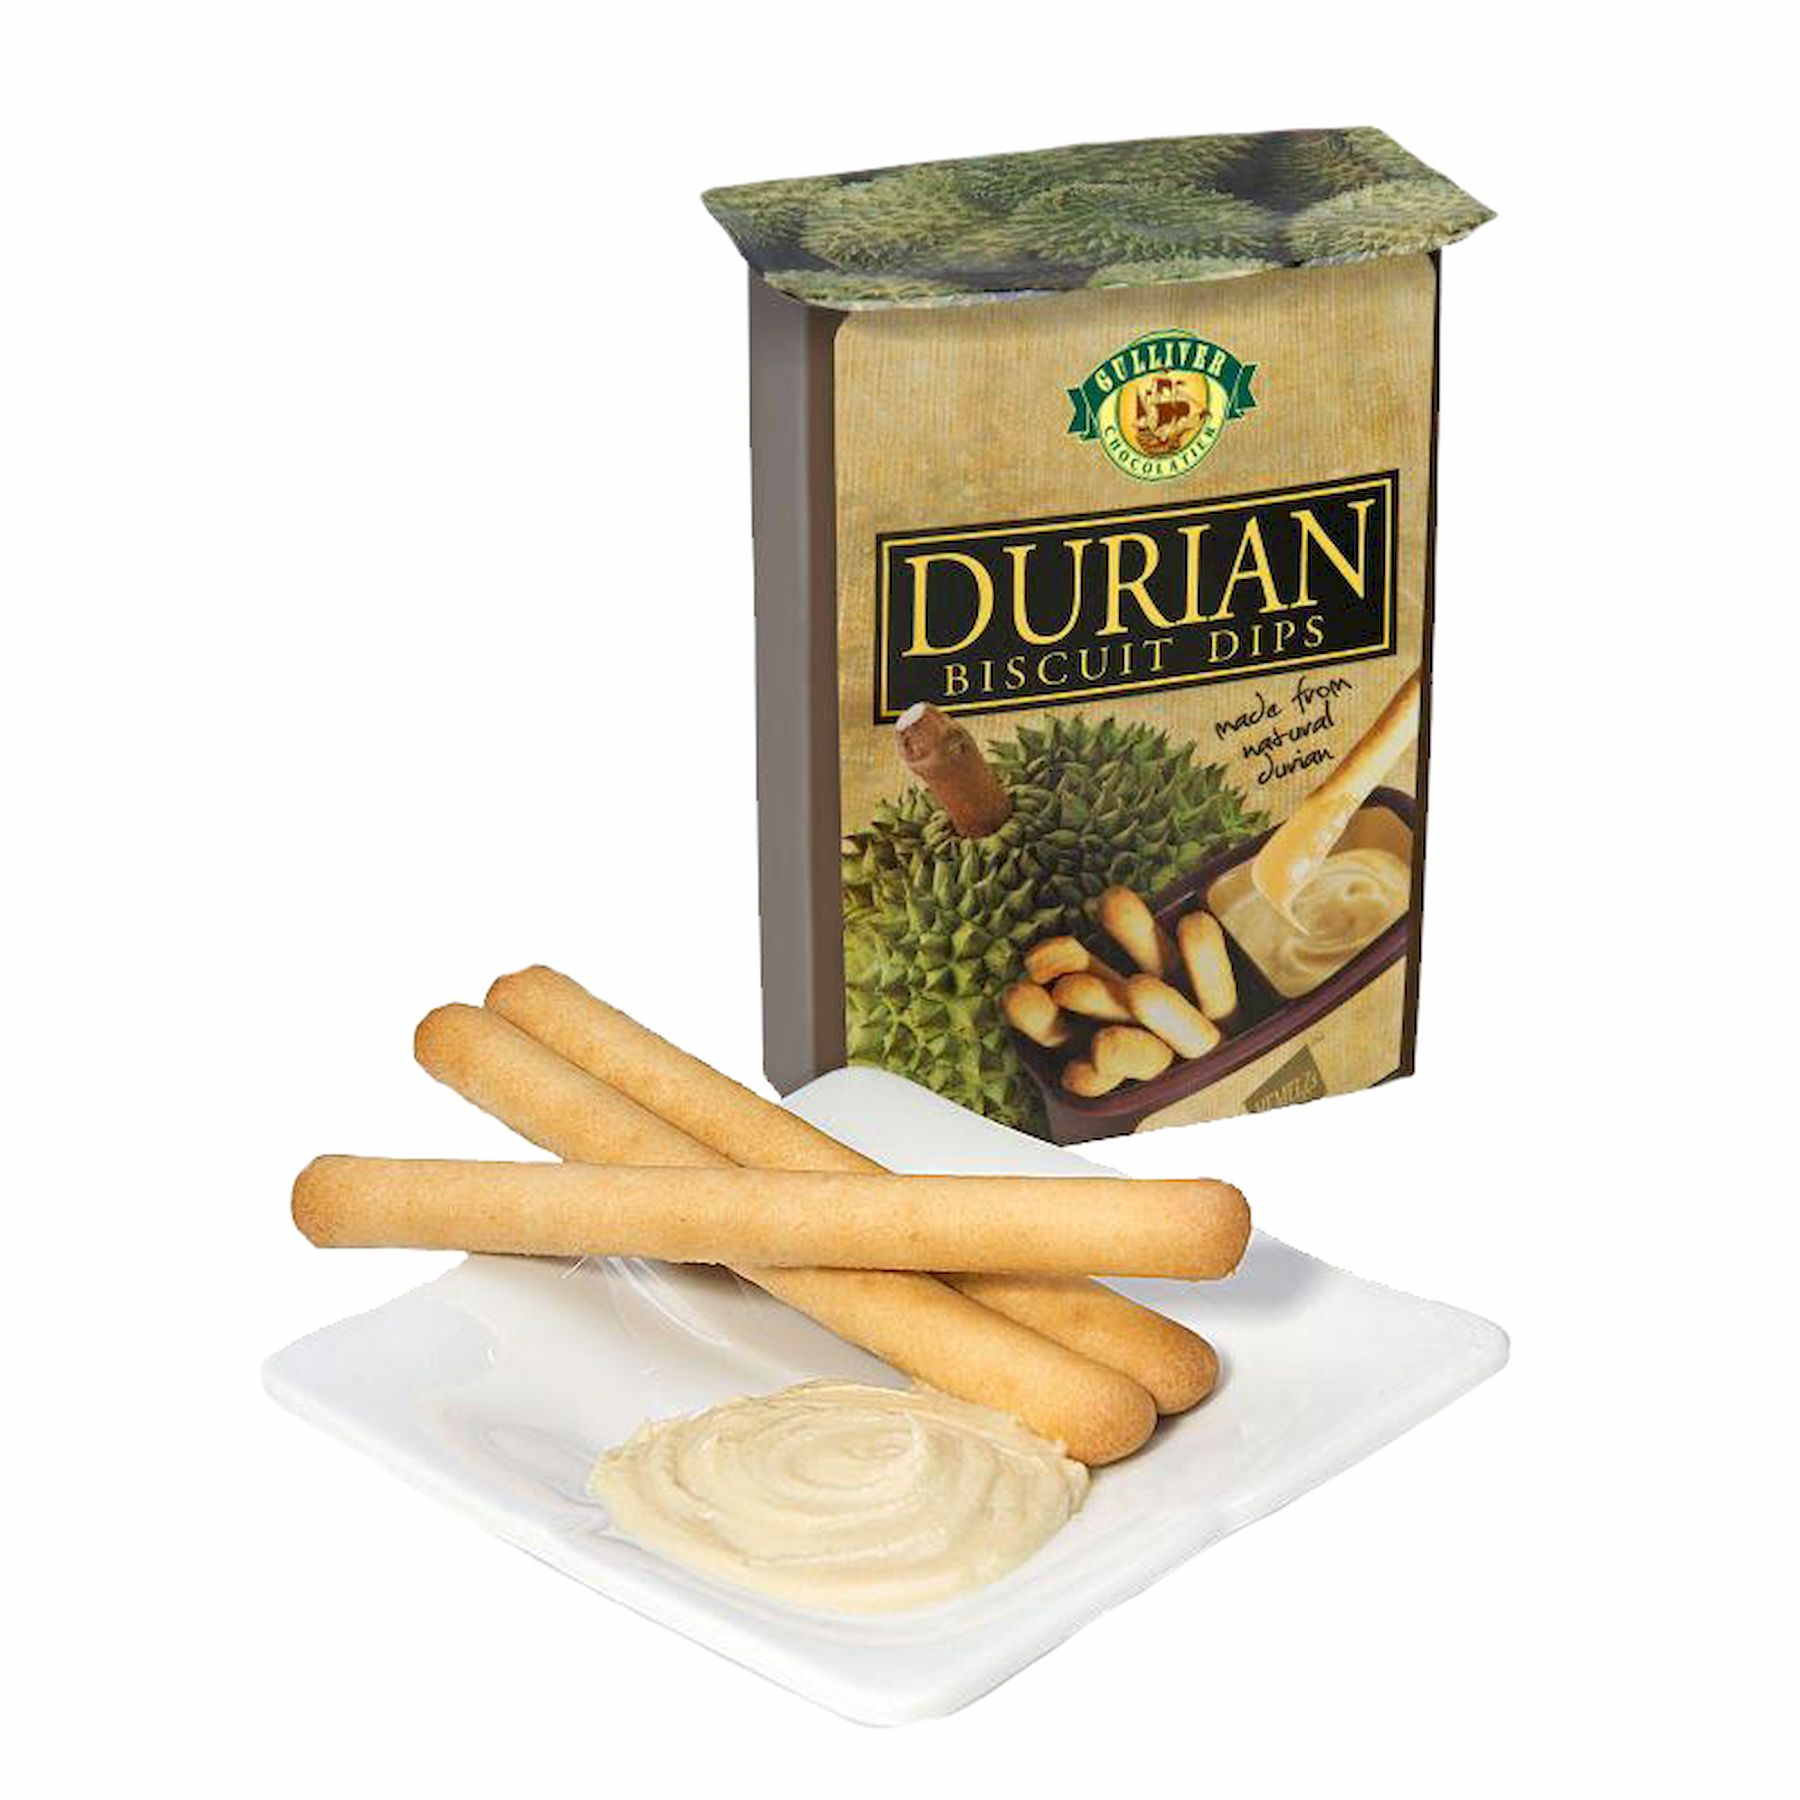 Durian Biscuit Dips